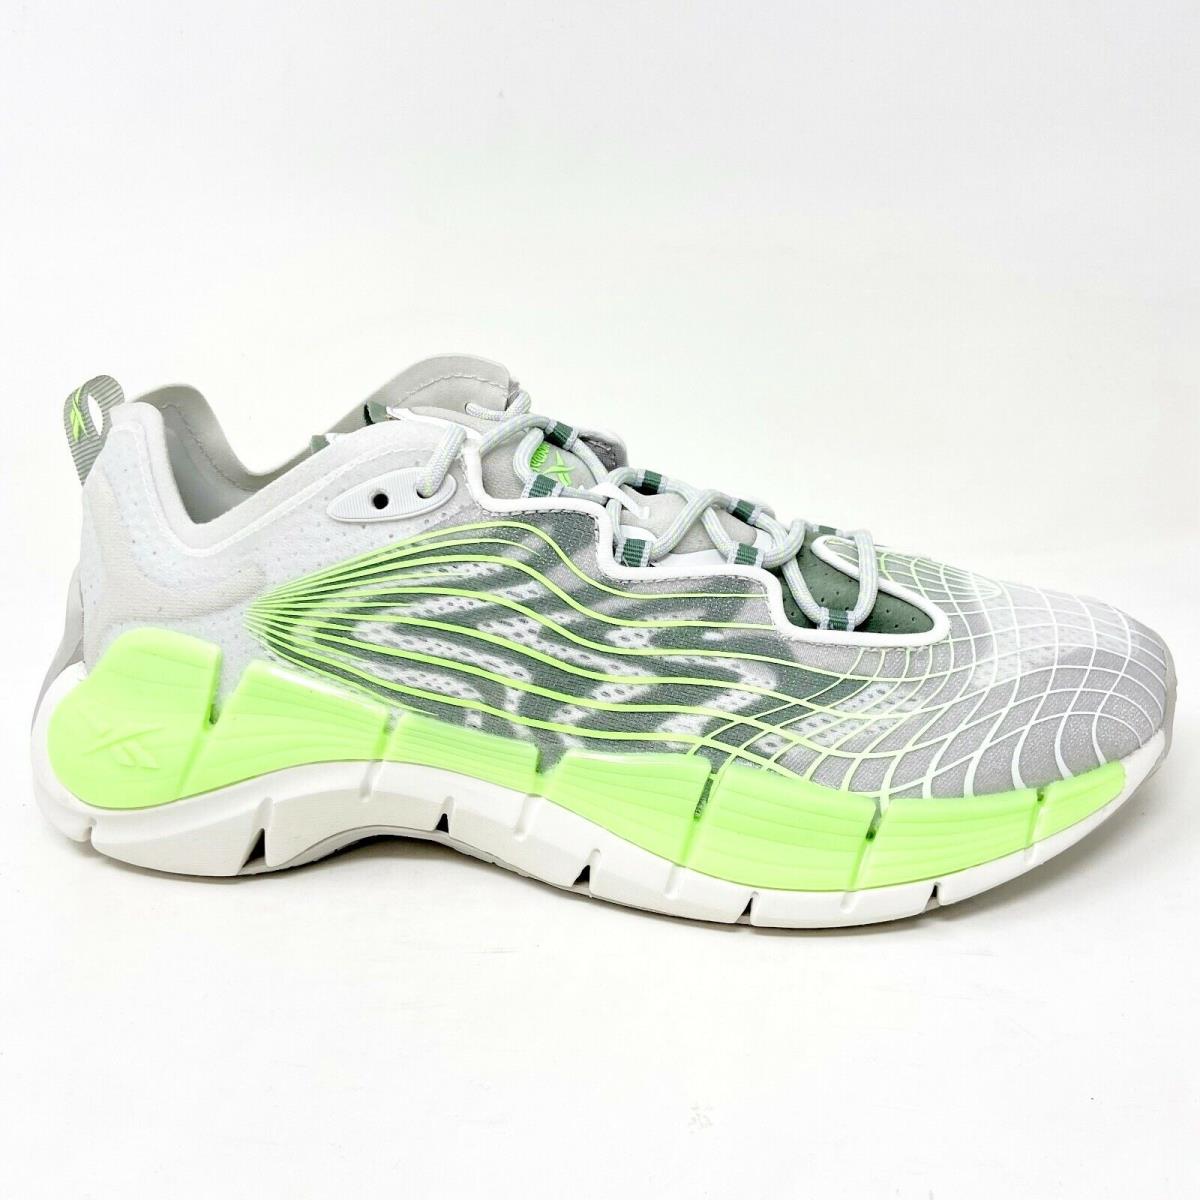 Reebok Zig Kinetica II Pure Grey Neon Mint Mens Running Shoes FY7744